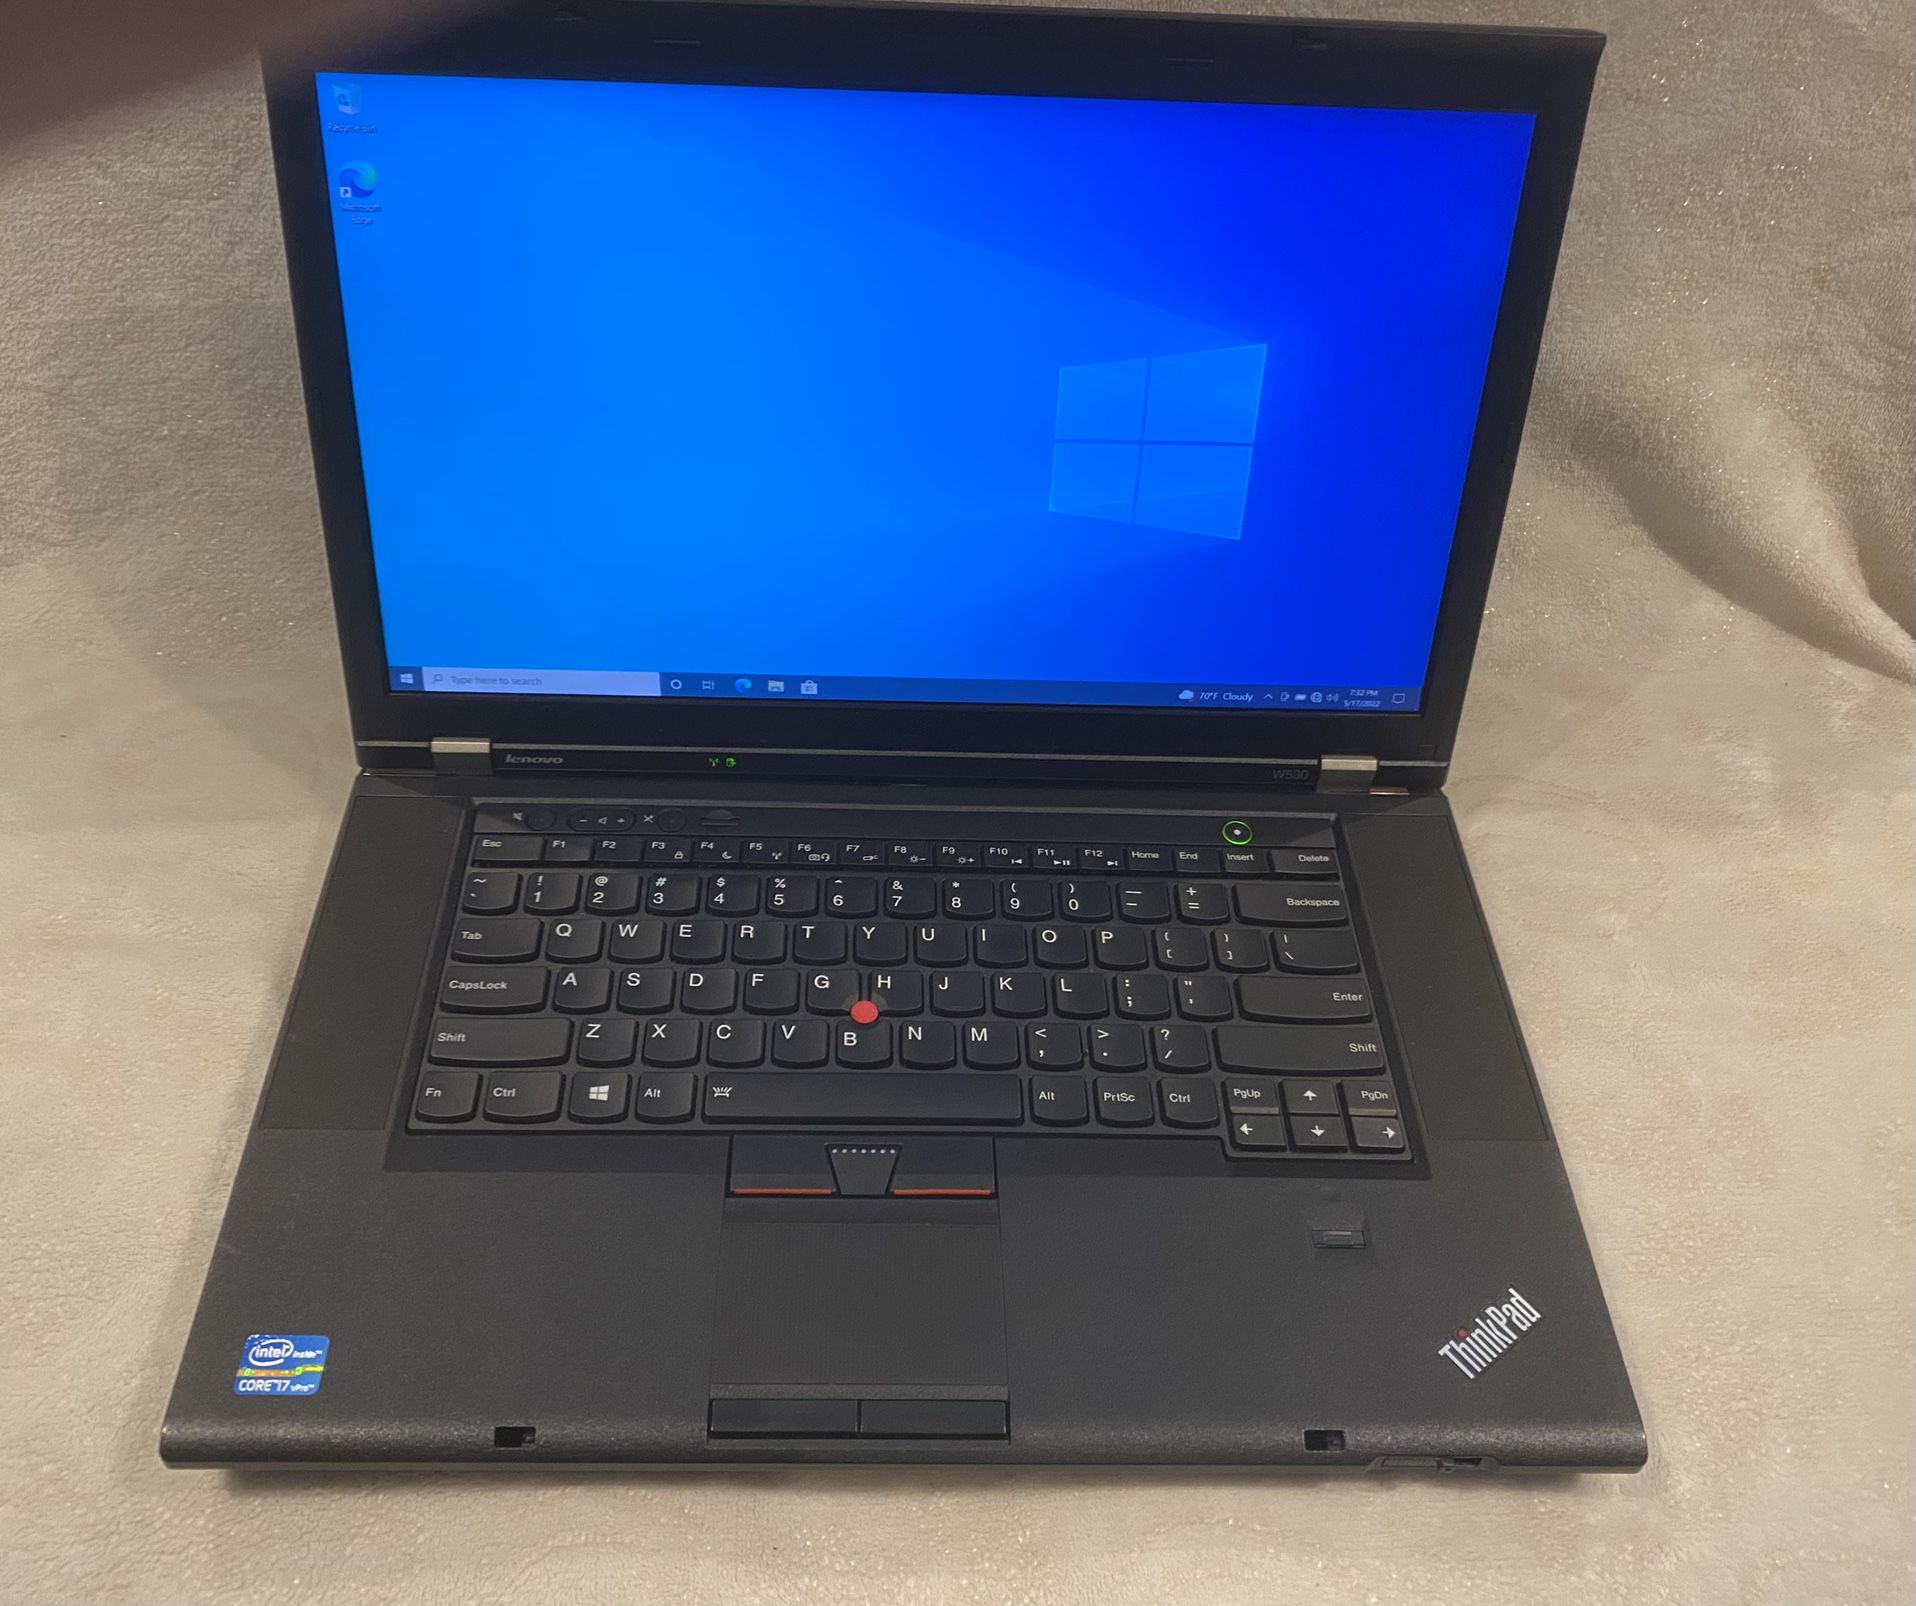 Lenovo Thinkpad W530 Laptop $250